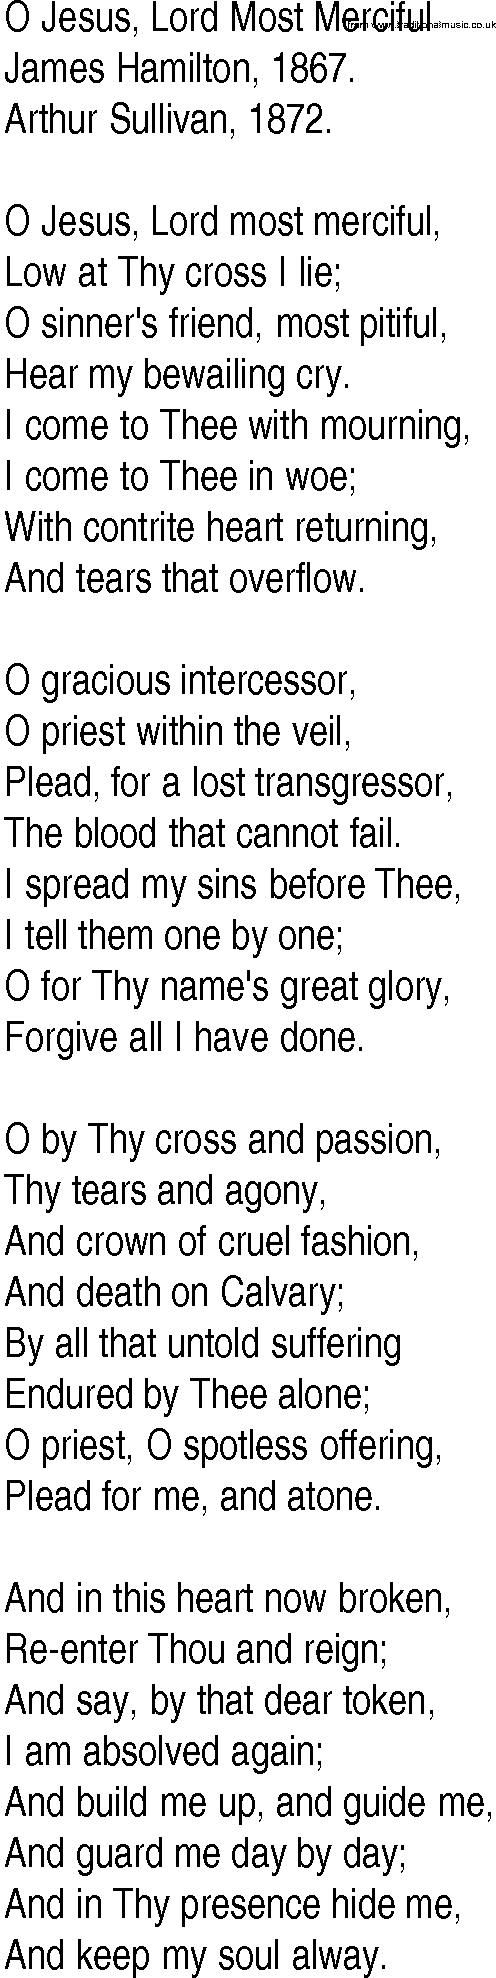 Hymn and Gospel Song: O Jesus, Lord Most Merciful by James Hamilton lyrics